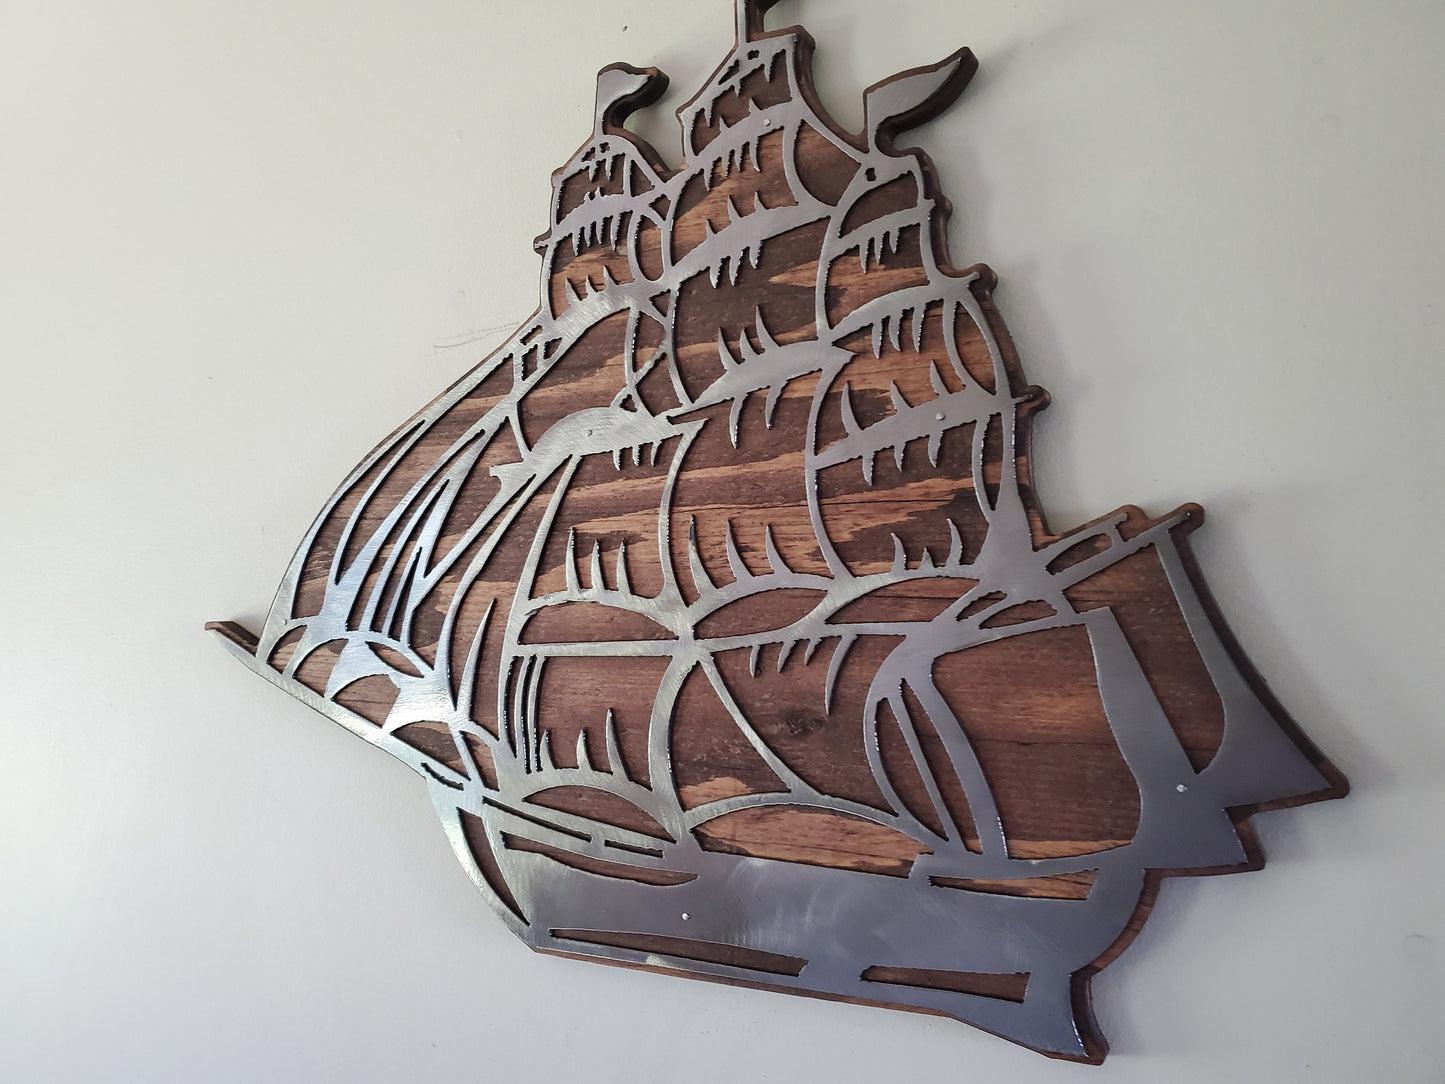 Pirate Ship Metal Art on Wood